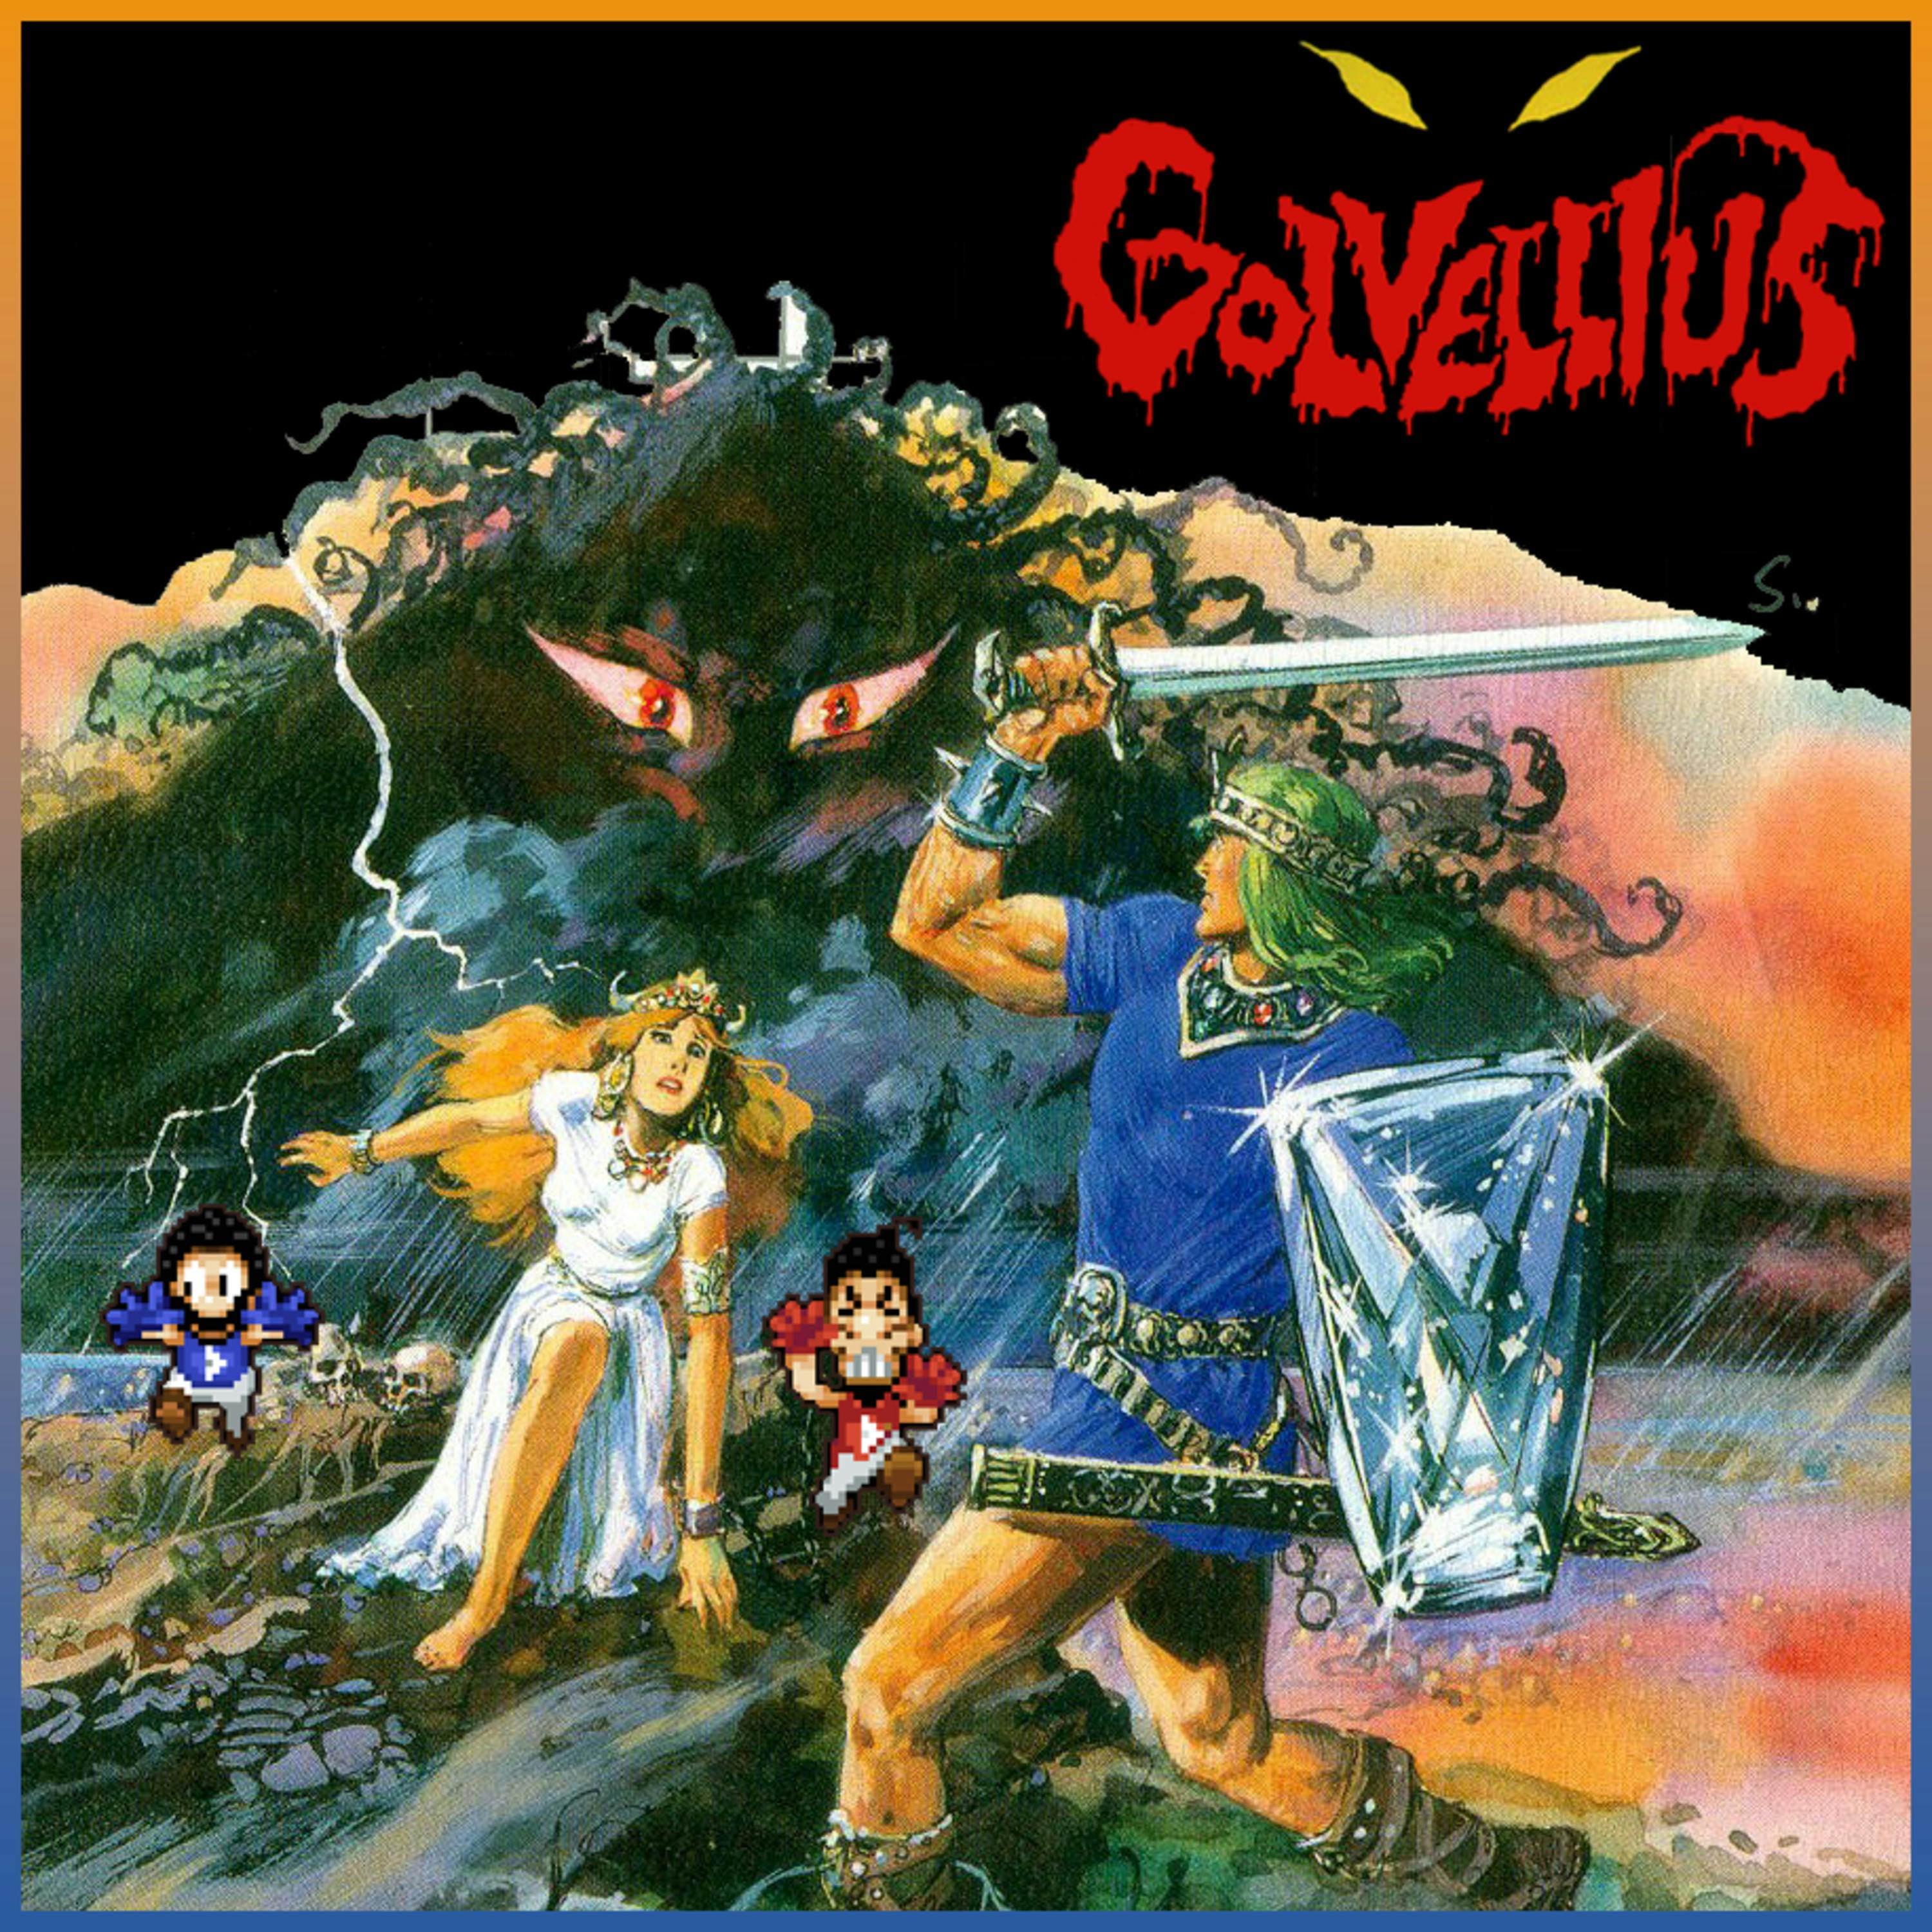 162 - Golvellius: Valley of Doom